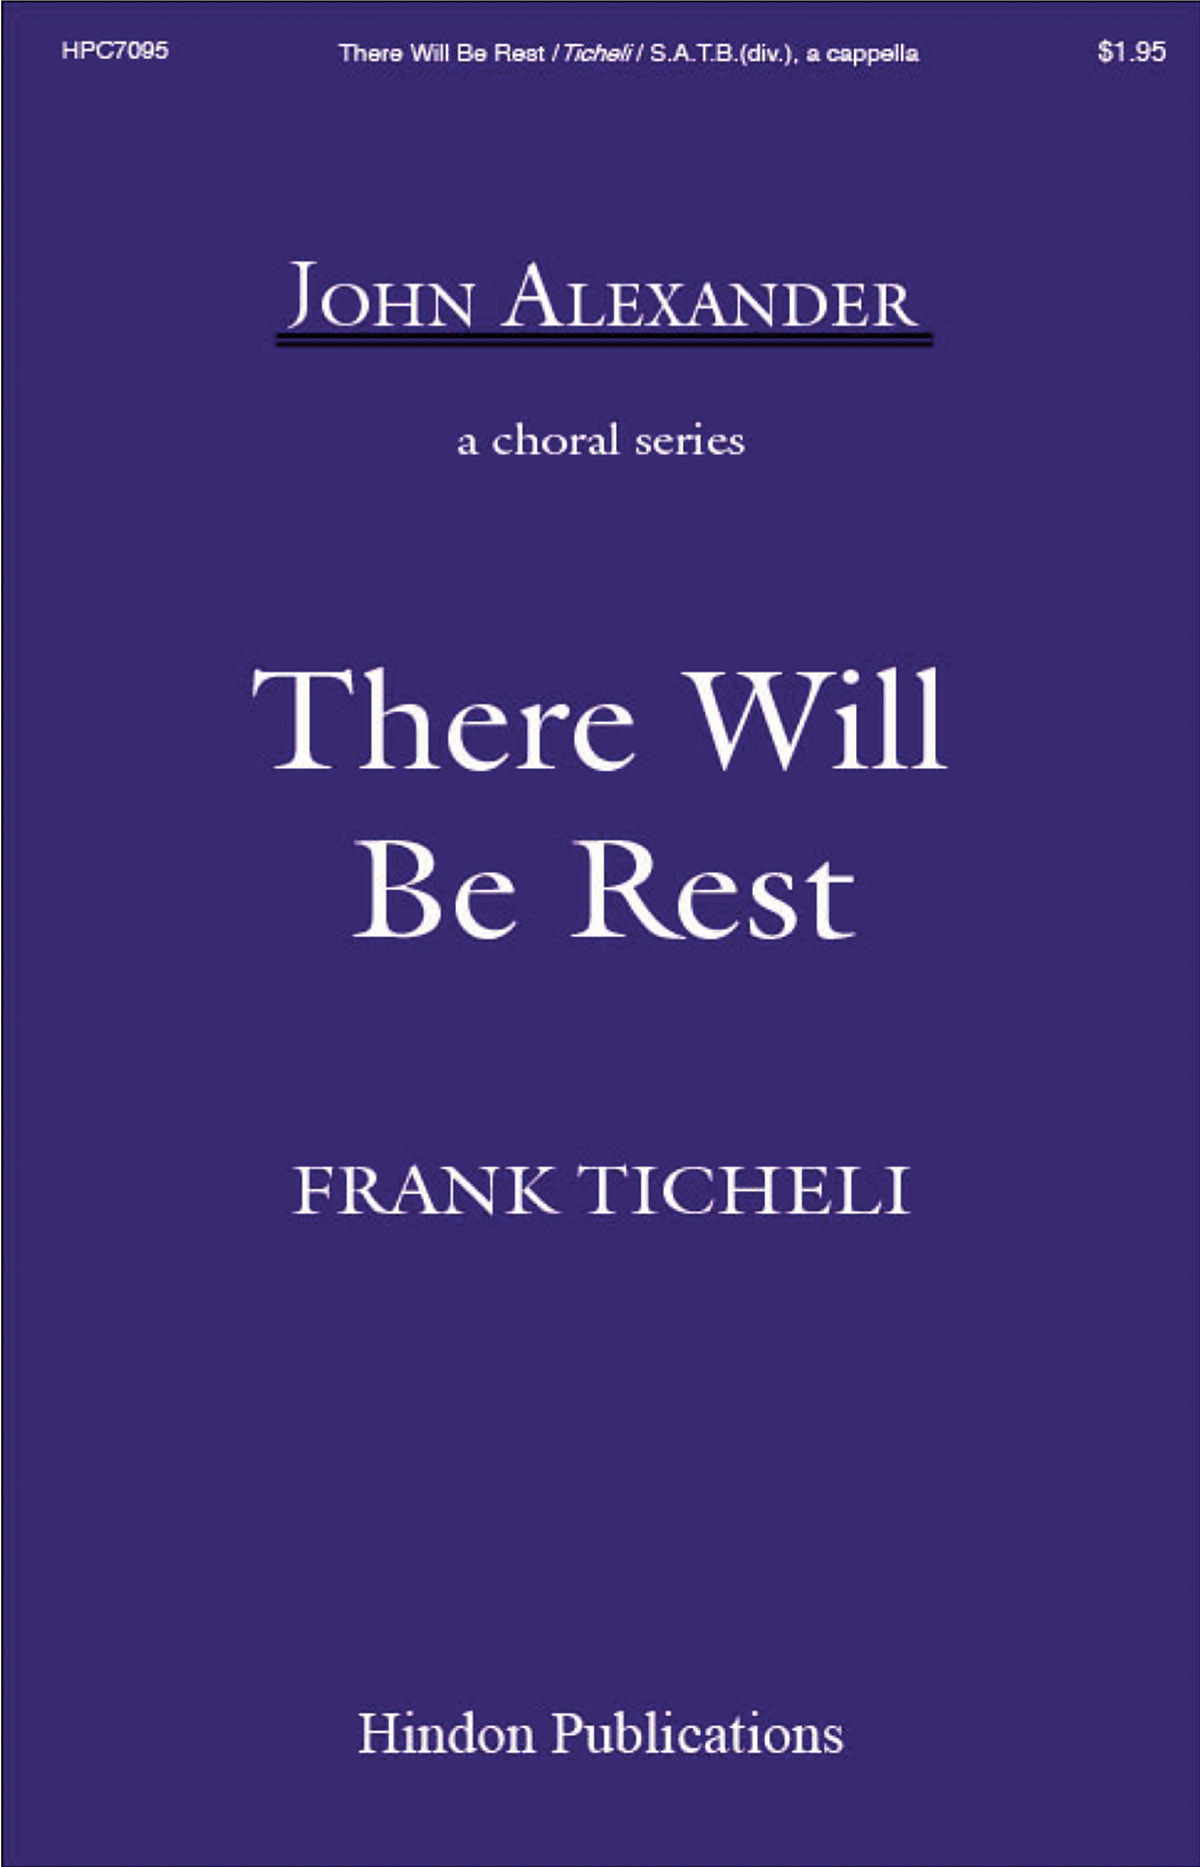 Frank Ticheli: There Will Be Rest: SATB: Vocal Score